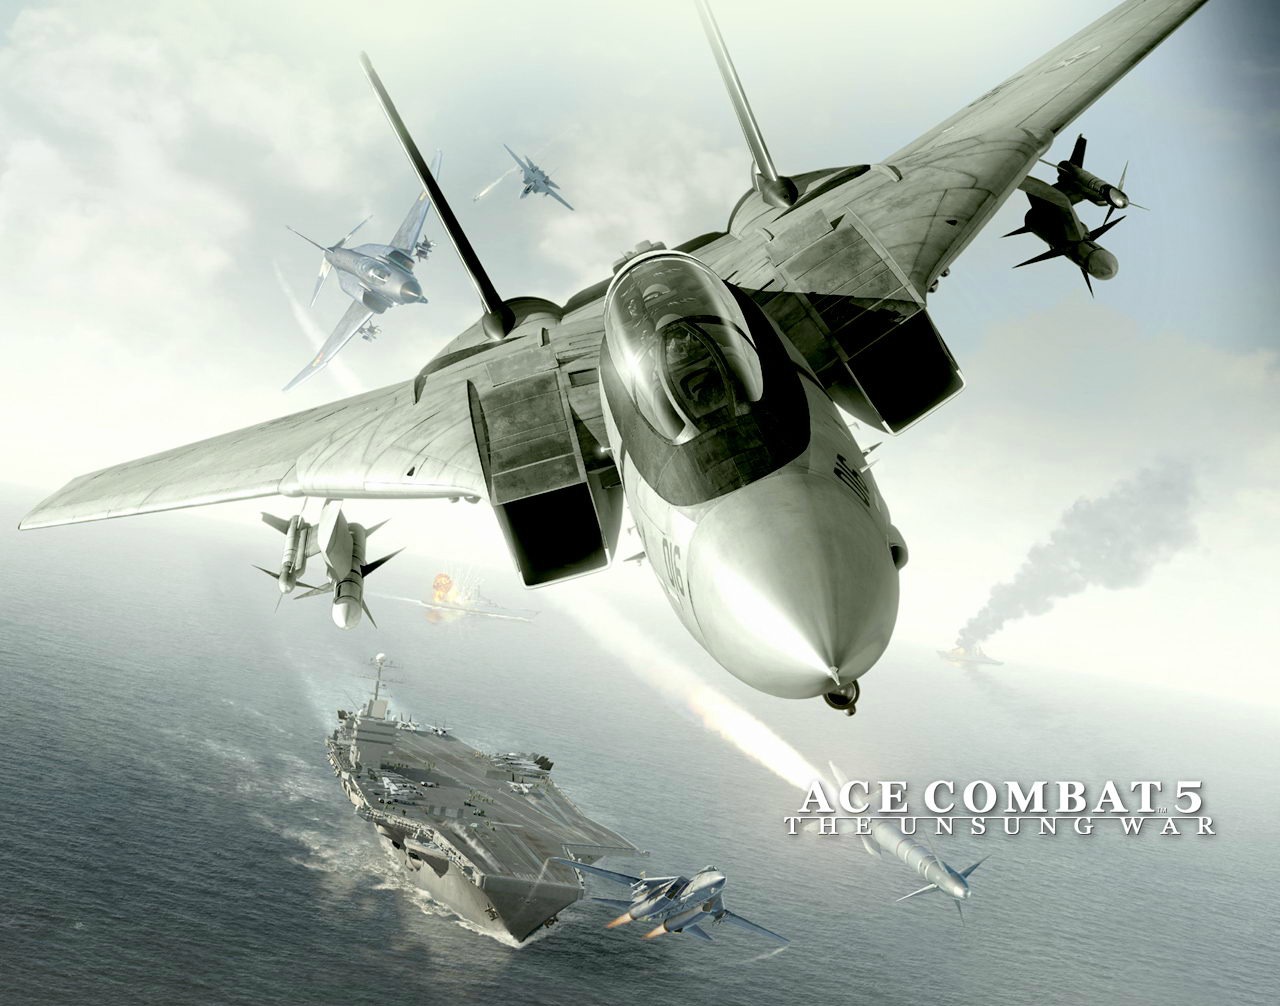 Ace Combat 5: The Unsung War Picture